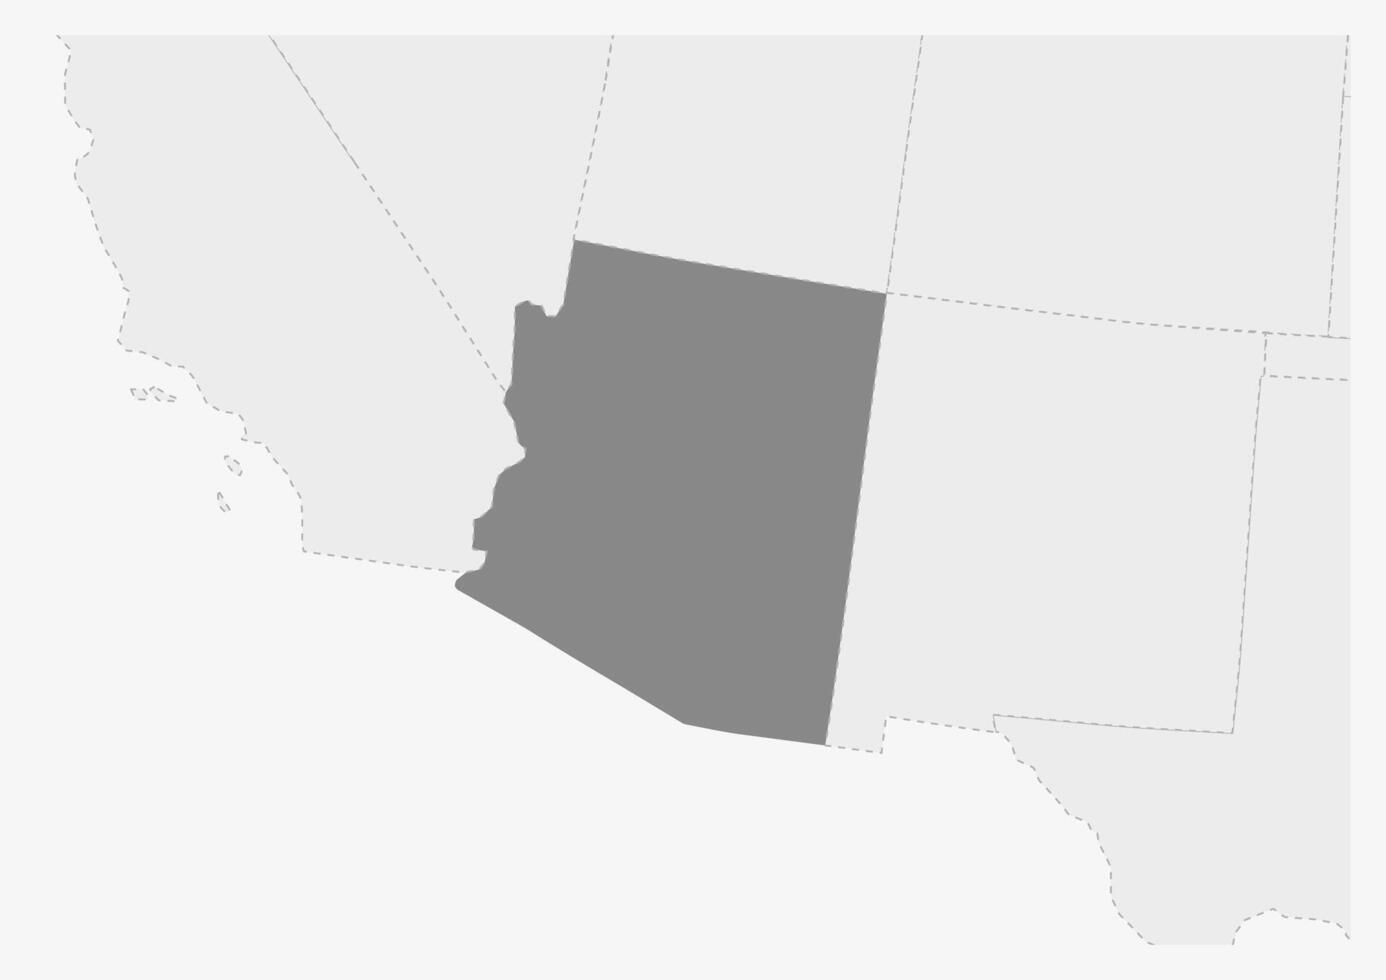 Karte von USA mit hervorgehoben Arizona Zustand Karte vektor